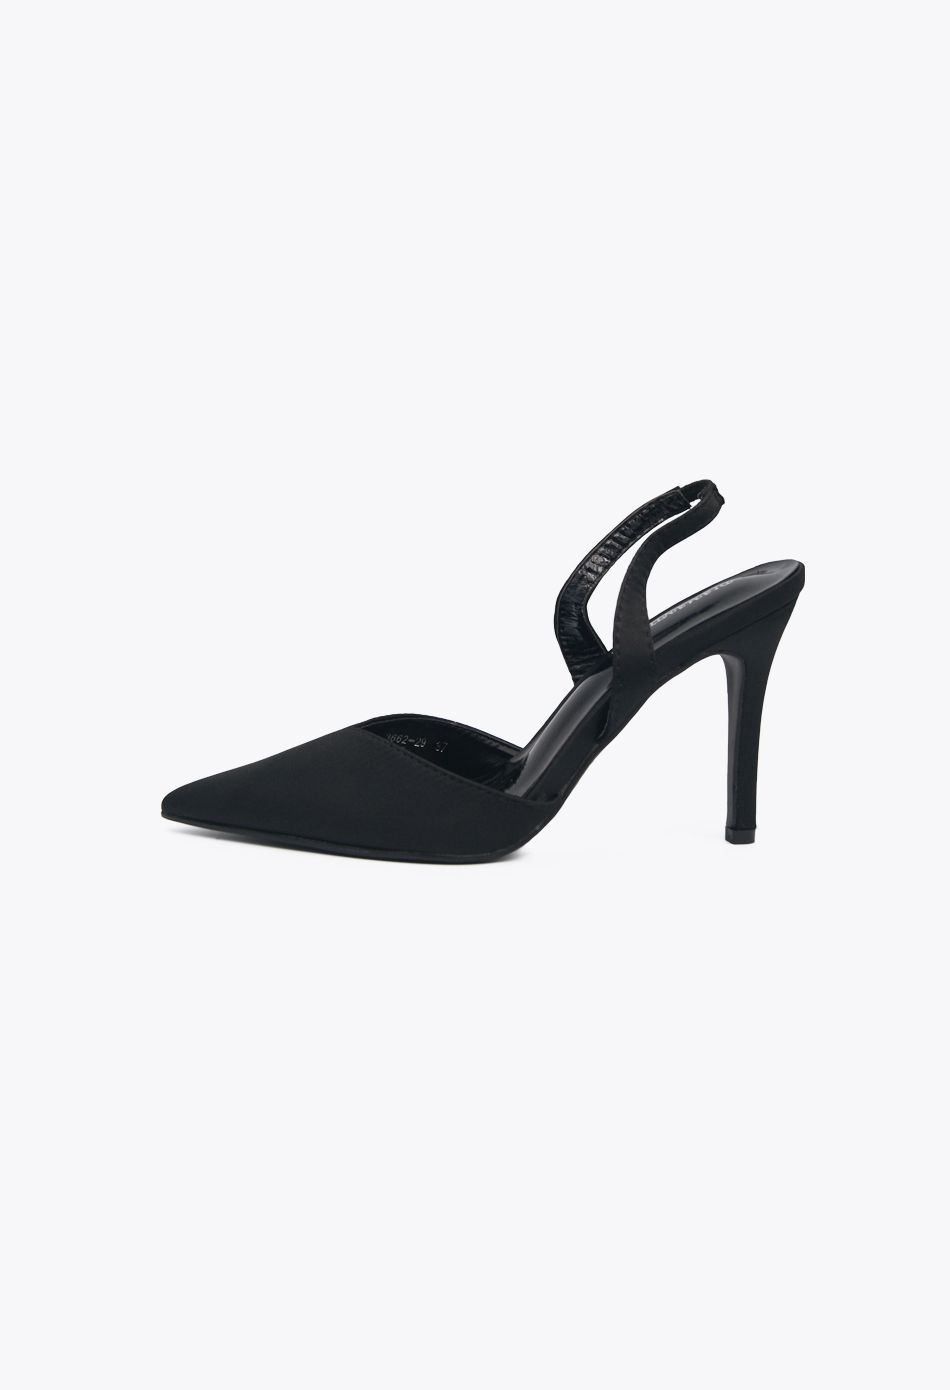 Flat Σανδάλια με στρας (Μεγάλα Νούμερα 41, 42, 43, 44) Μαύρο / DM98N-black Ανοιχτά Παπούτσια joya.gr